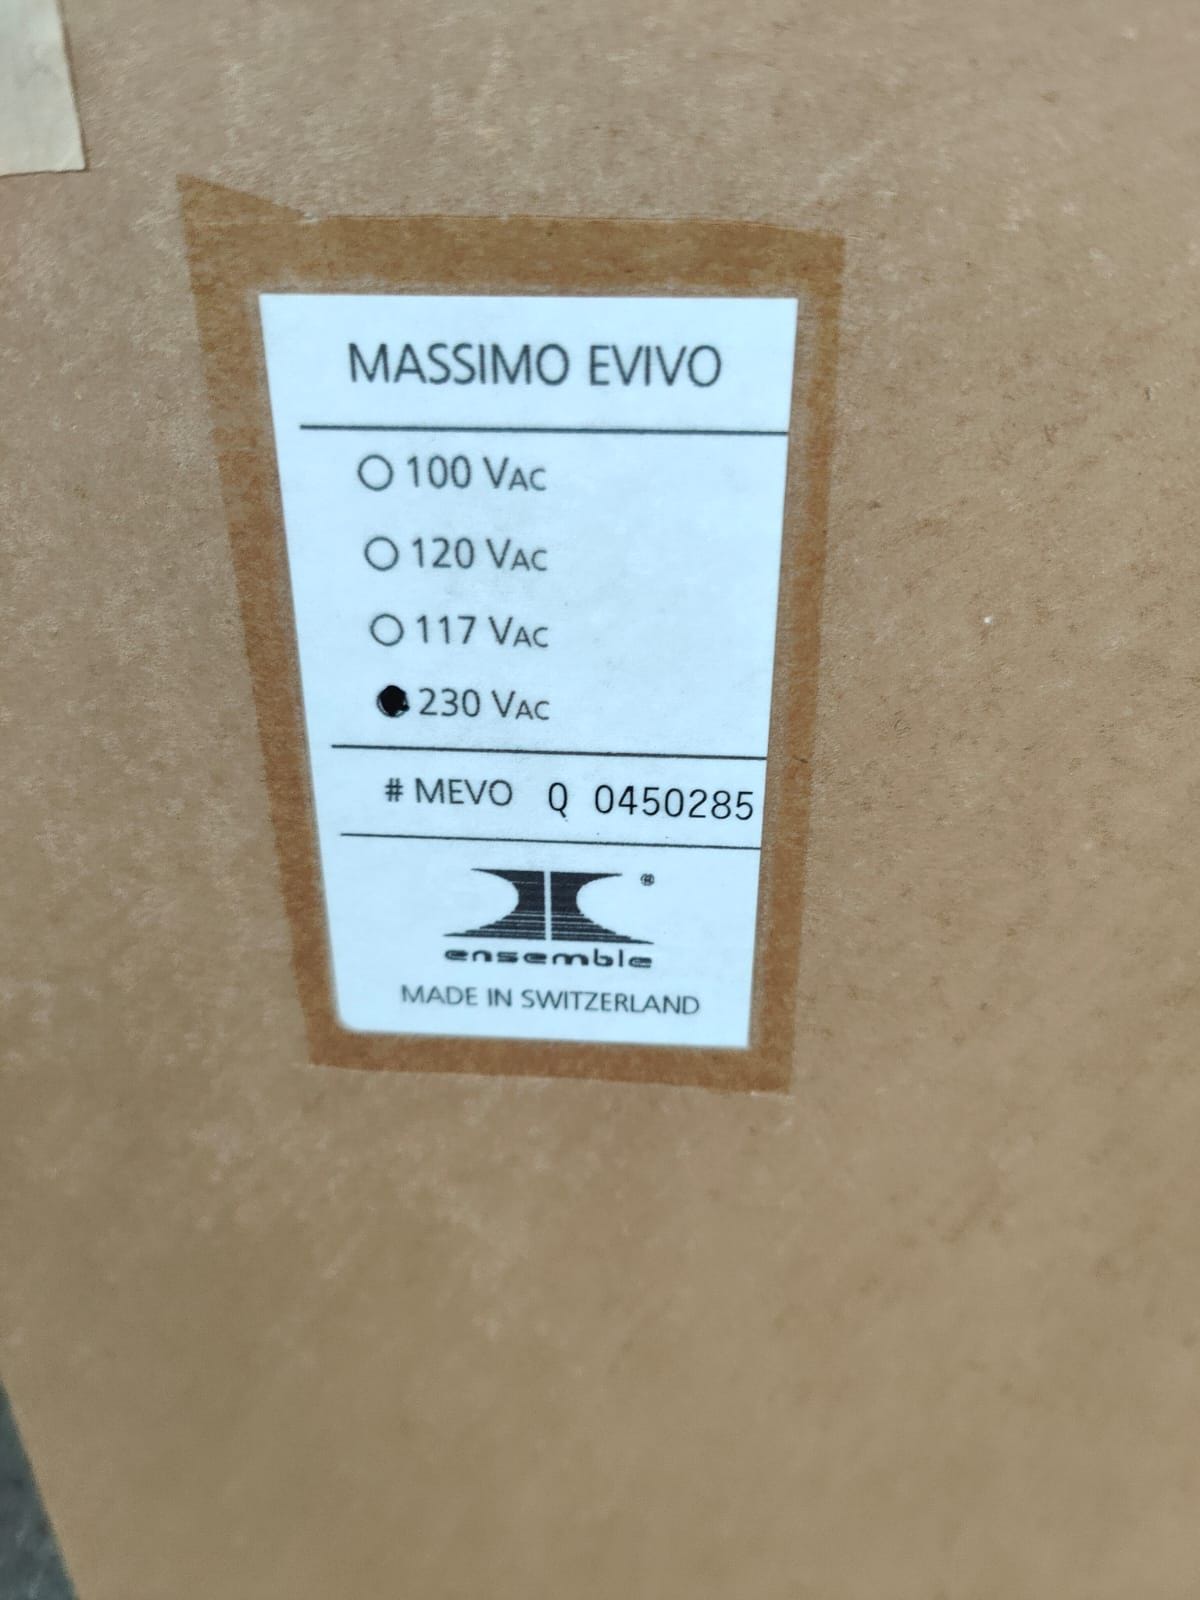 Ensemble Massimo Evivo power amplifier from 2021 8